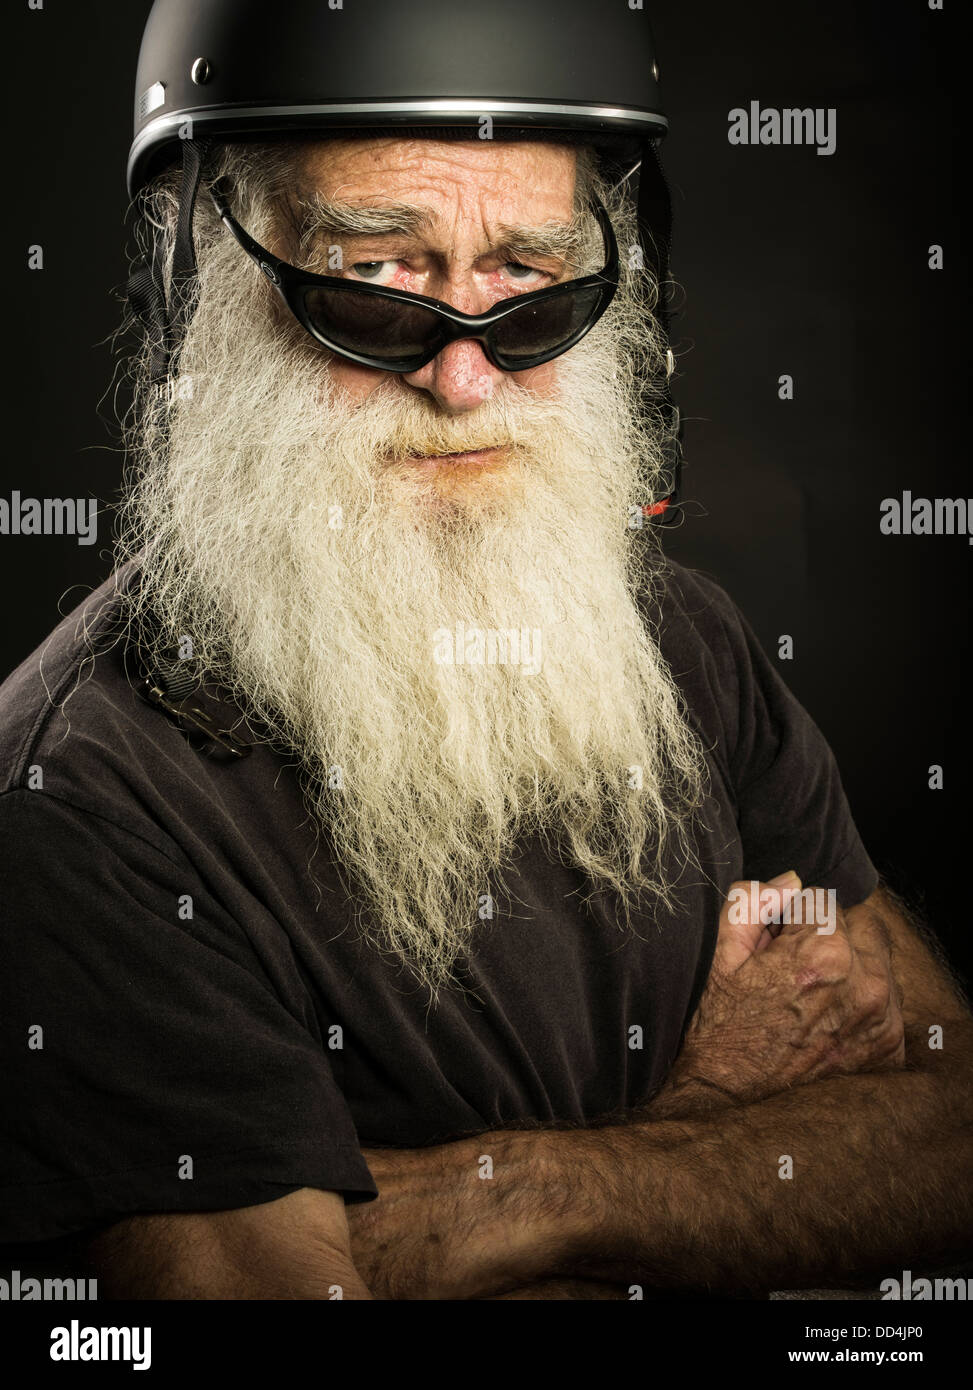 old biker with white beard and helmet Stock Photo - Alamy